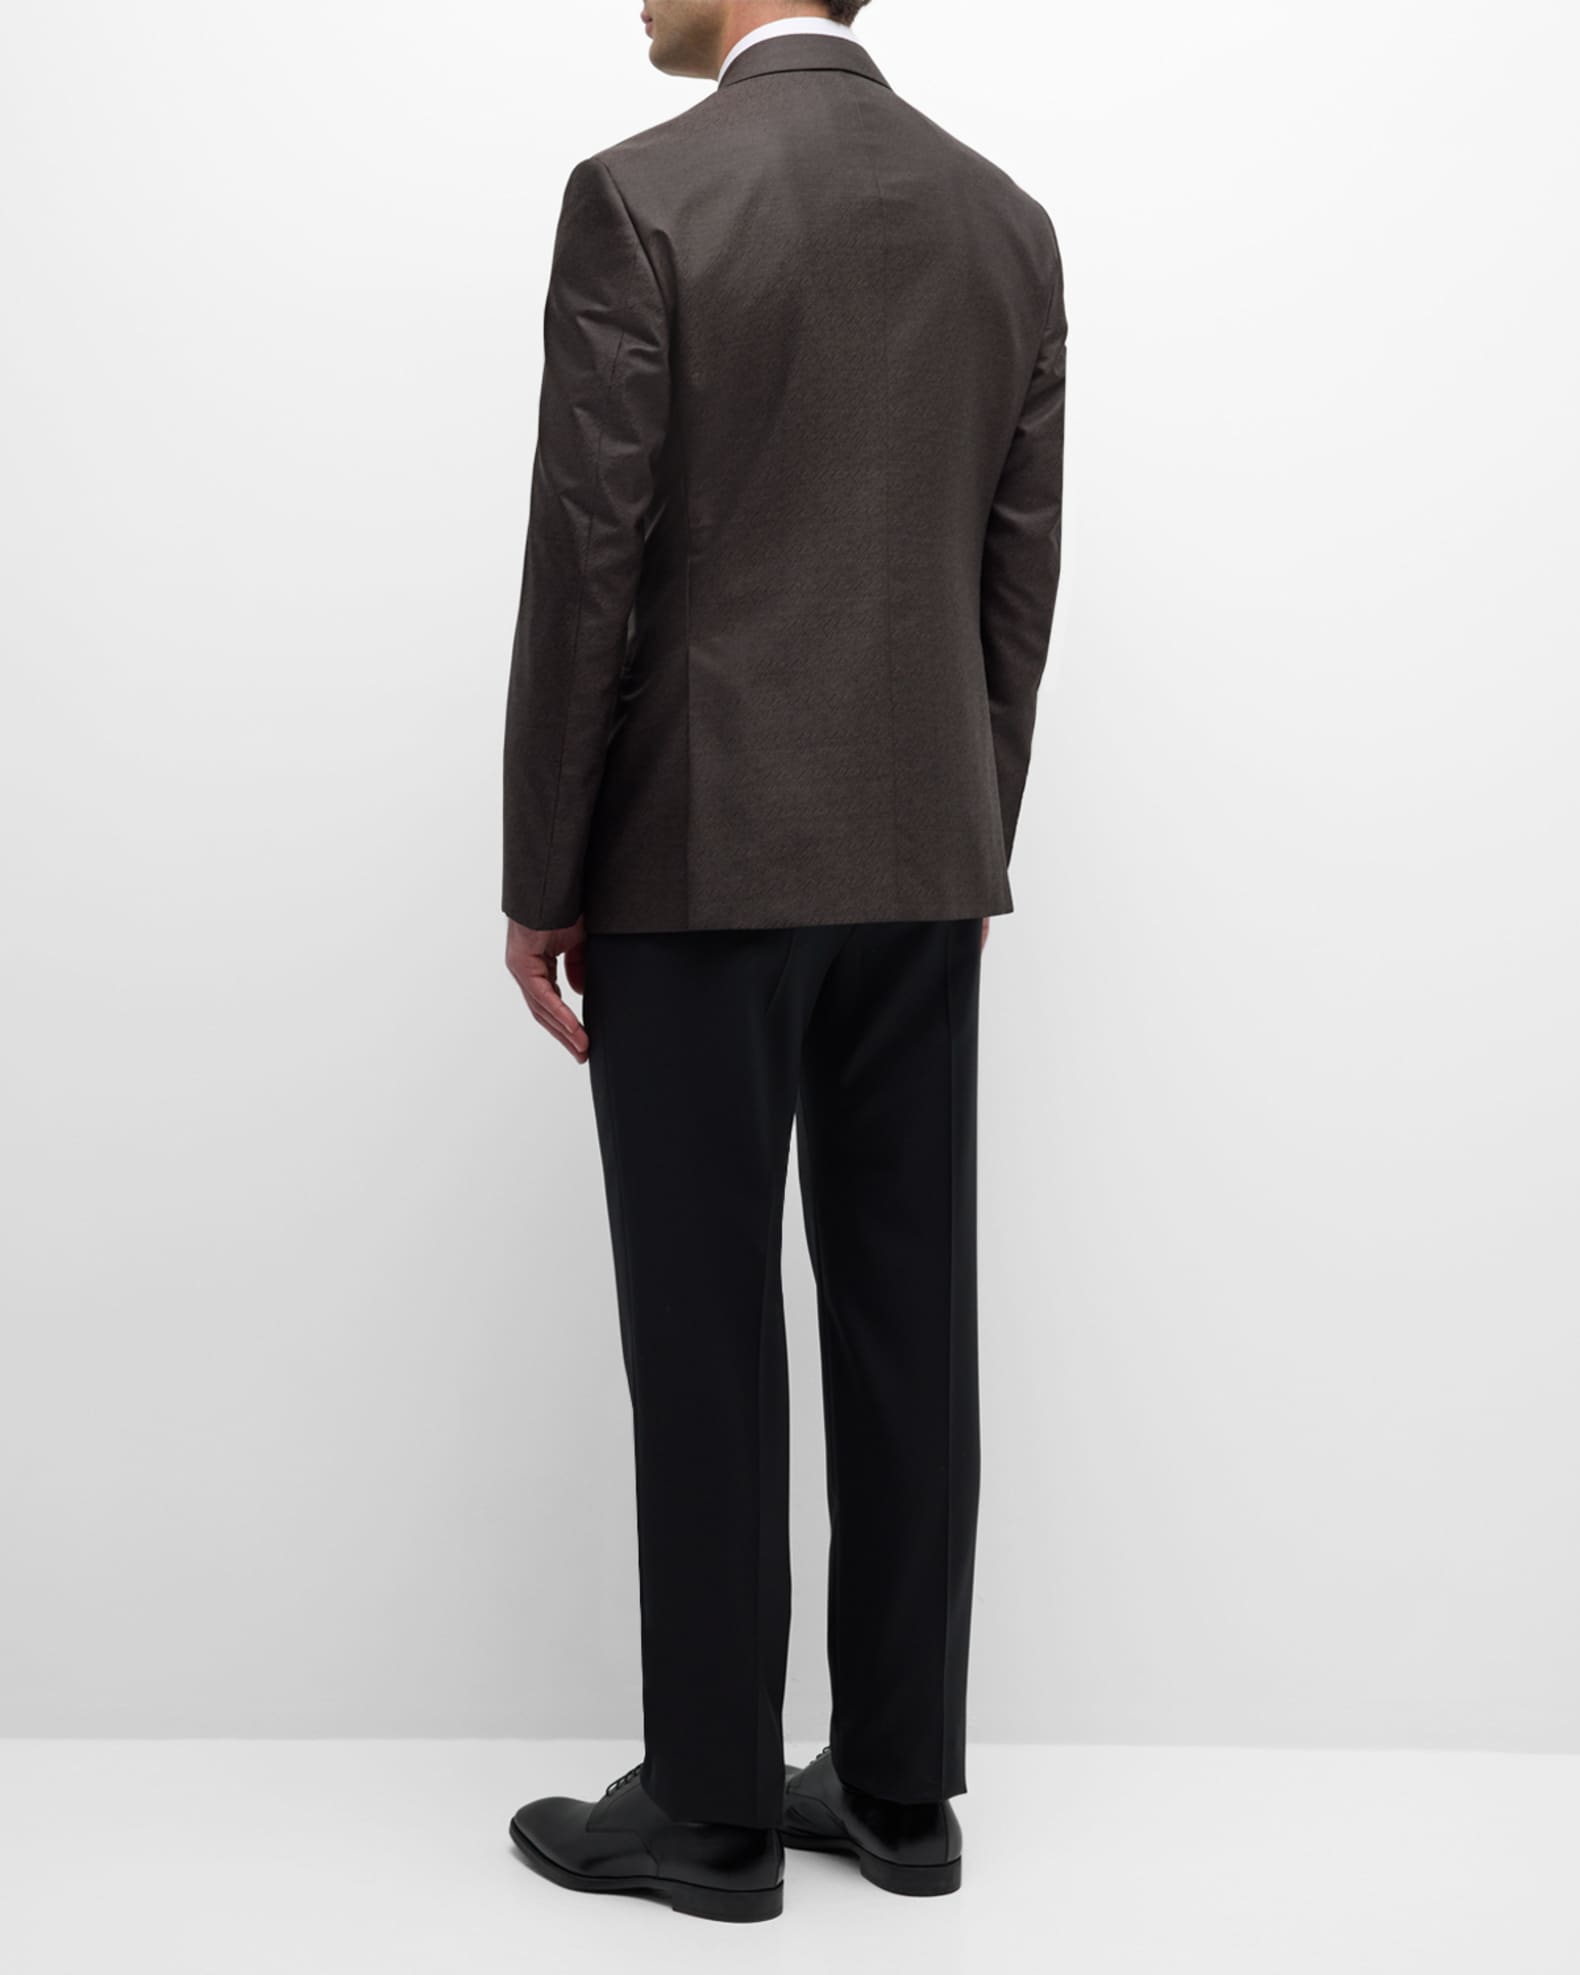 Giorgio Armani Men's Textured Dinner Jacket | Neiman Marcus